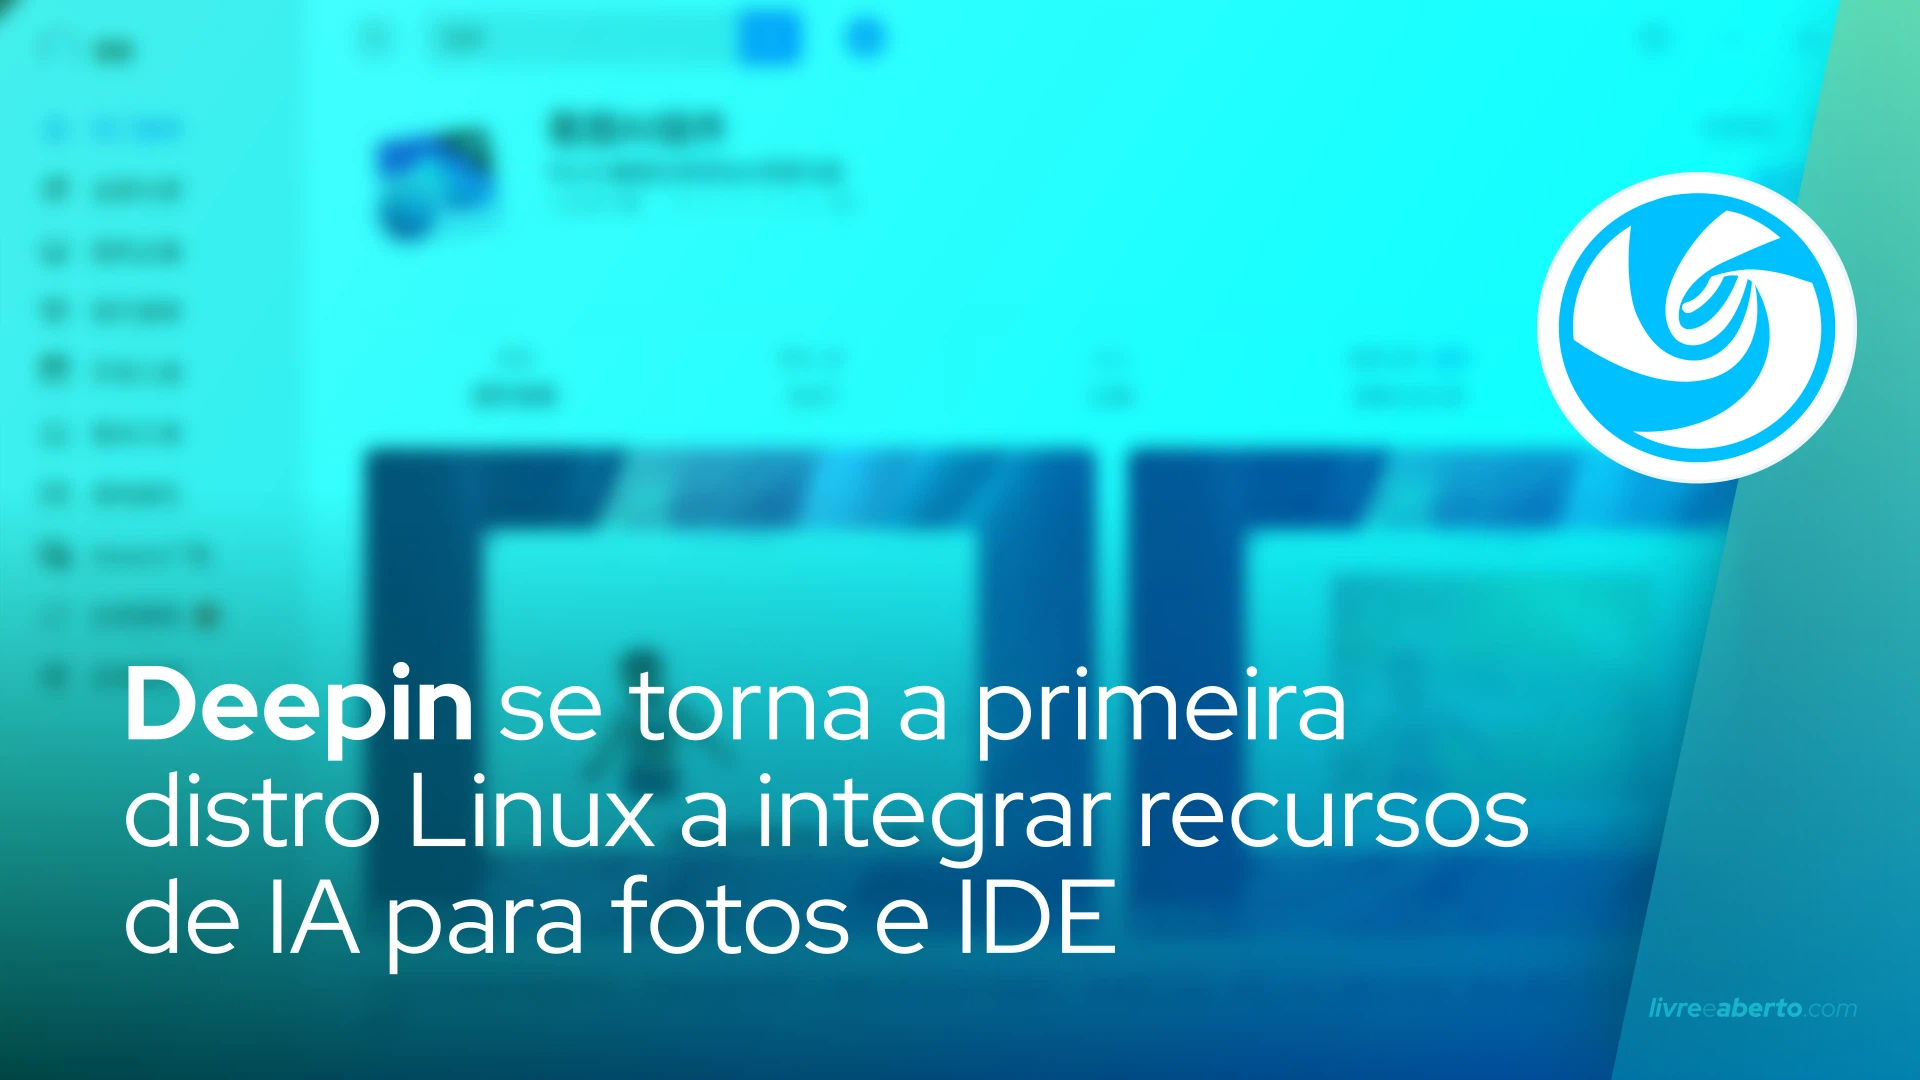 Deepin se torna a primeira distro Linux a integrar recursos de IA para fotos e IDE